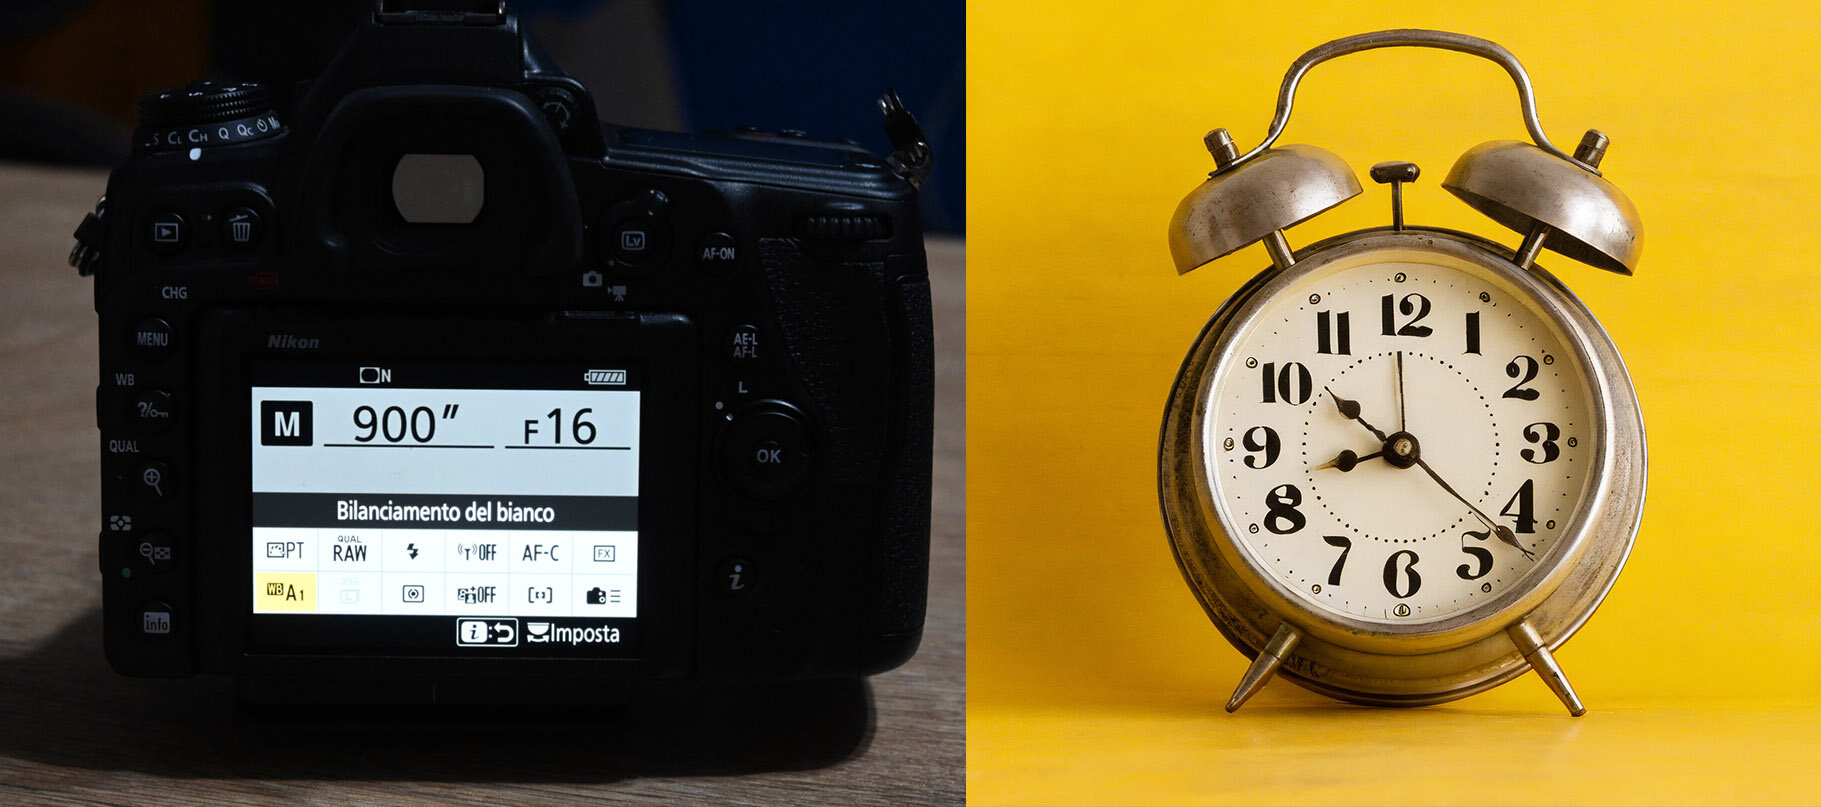 More information about "Nikon D780 e tempi lunghi [tempi di posa estesi per Nikon]"